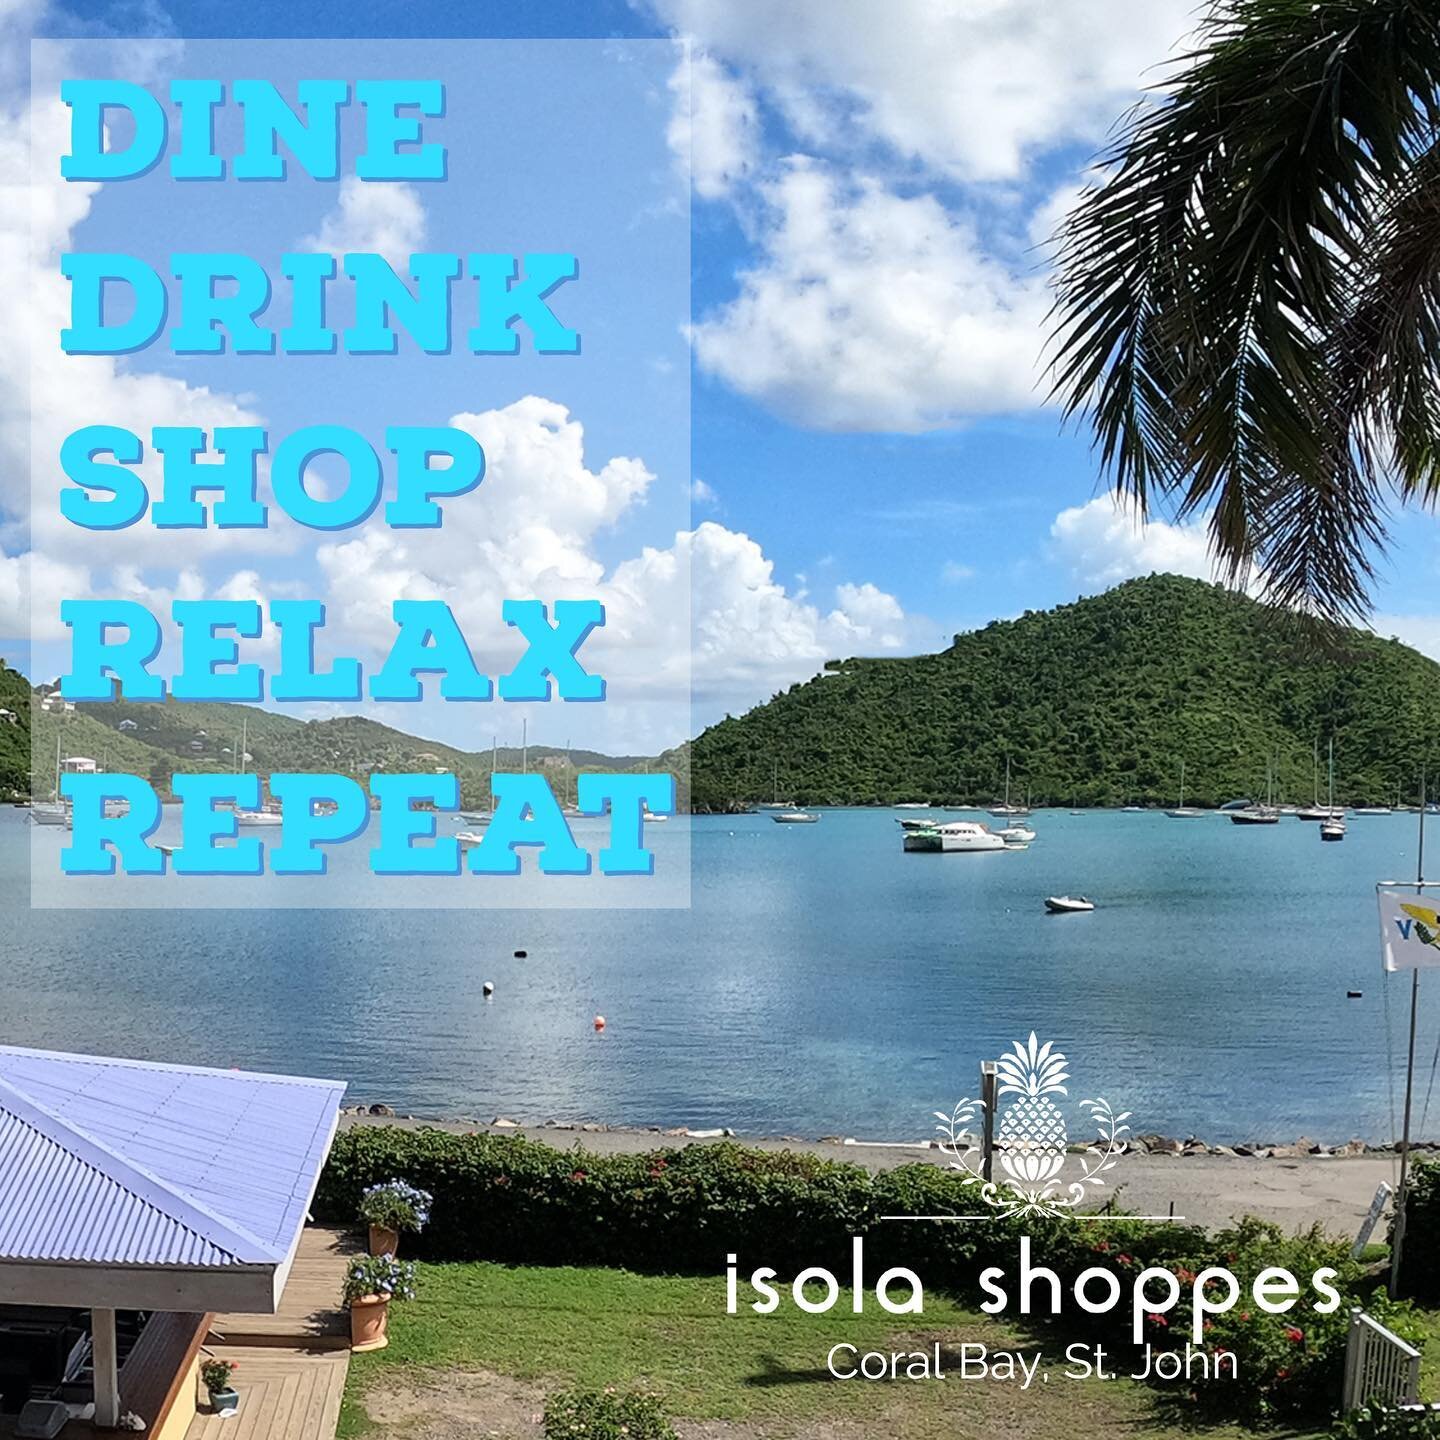 Weekend plans? Put us on your list! Hope to see you soon! #coralbaystjohn #stjohnsisland #stjohnvirginislands #stj #lovecity #stt #stx #islands #caribbean #relax #shop #eat #drink #shopsmall @isolashoppes @spalala_vi @antaresusvi @islandhoststj_conci